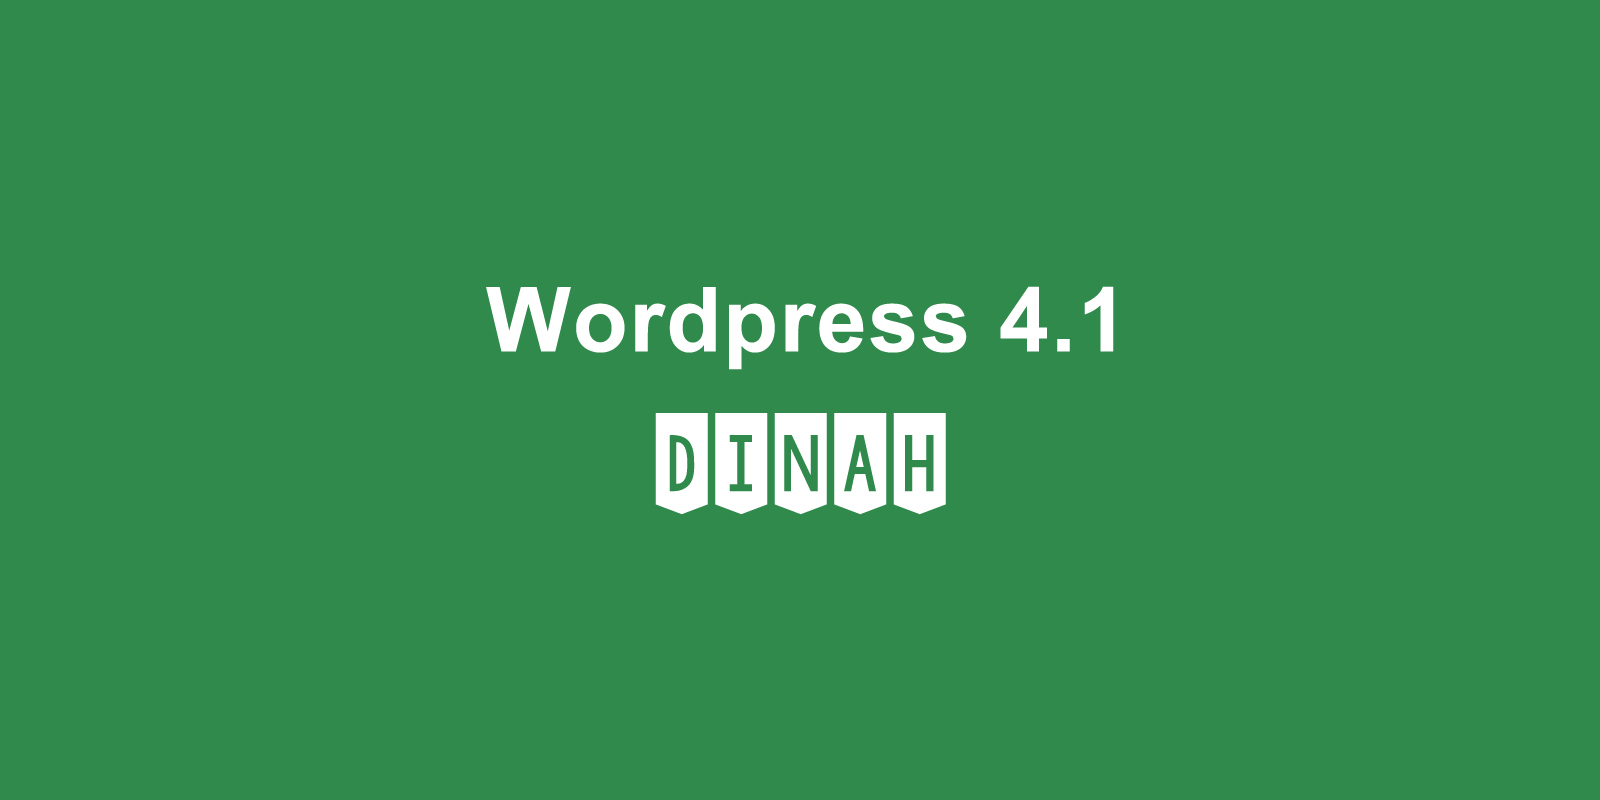 WordPress 4.1 Dinnah